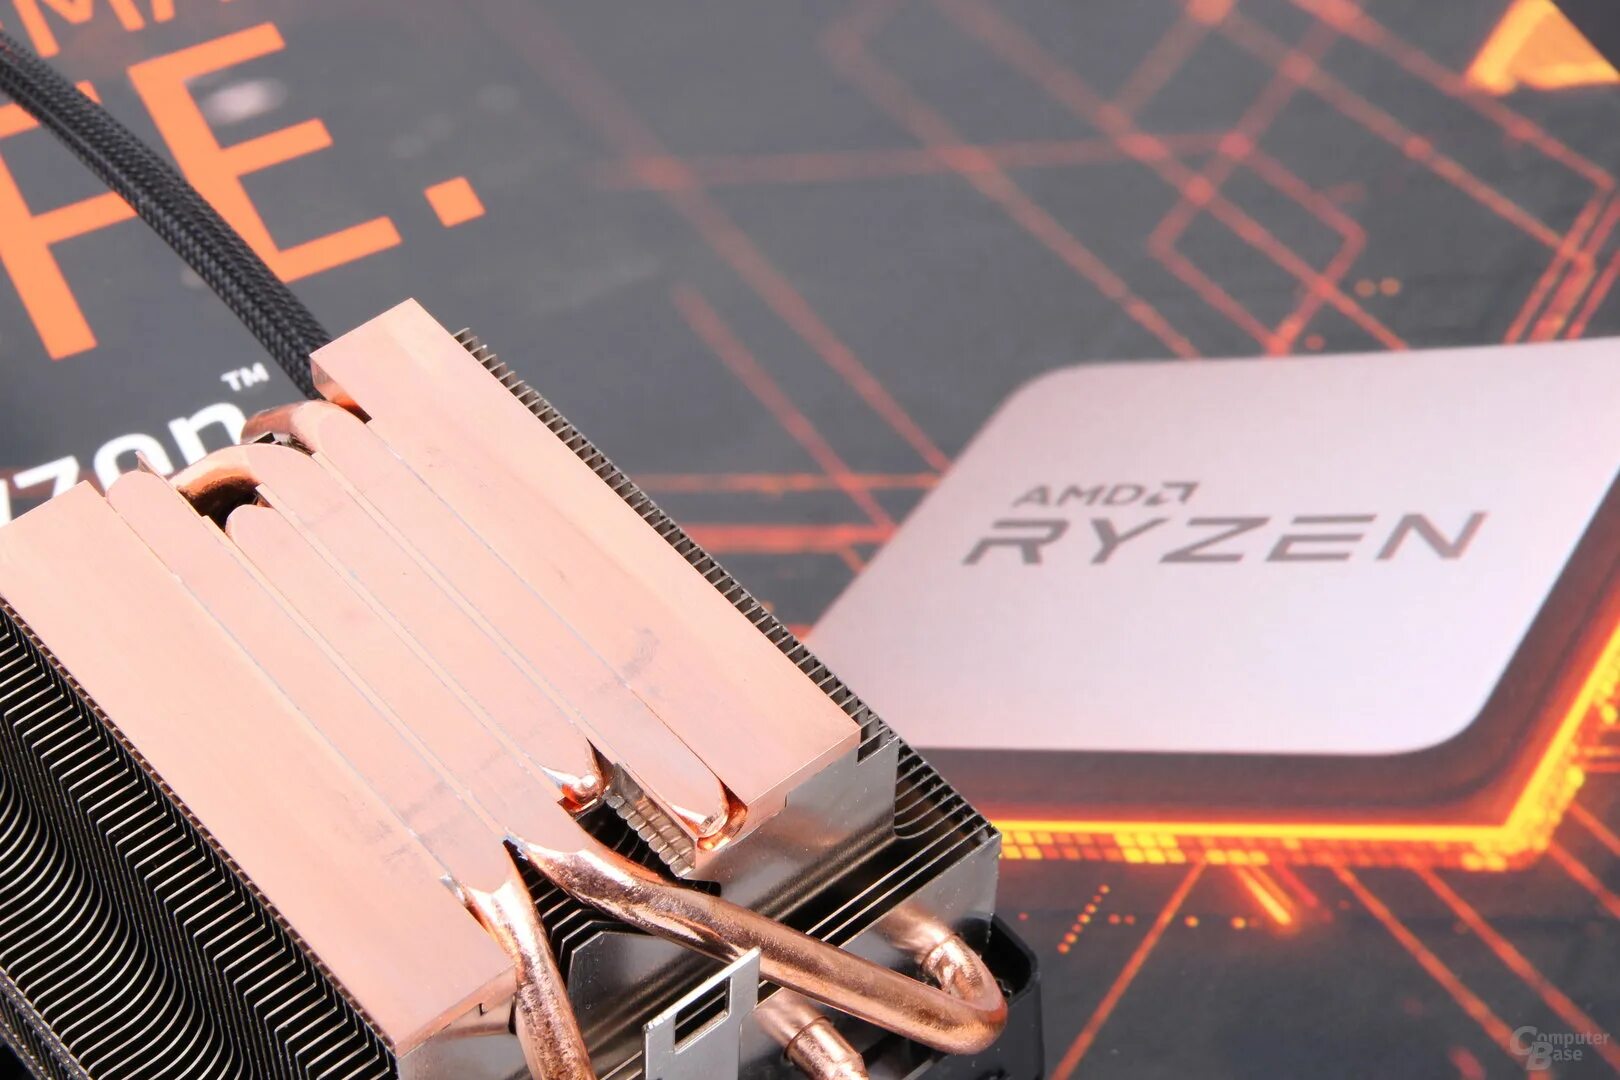 Ryzen 7 2700 купить. AMD Ryzen 7 2700x. Ryzen 7 2600. AMD Ryzen 5 2600. Процессор AMD Ryzen 7 2700e.